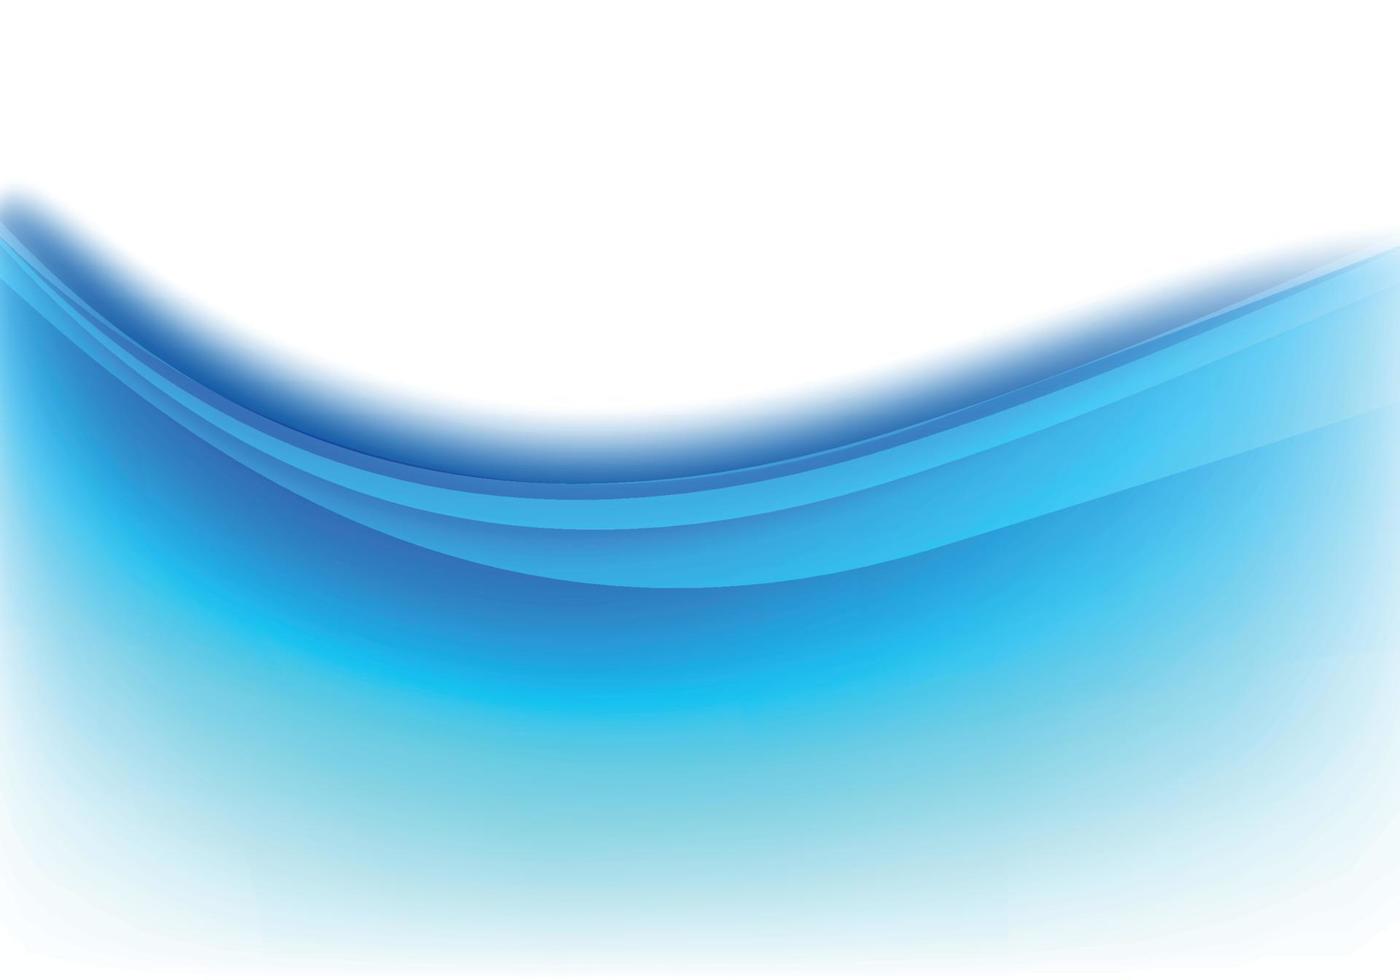 fundo de onda elegante de fluxo suave azul abstrato vetor